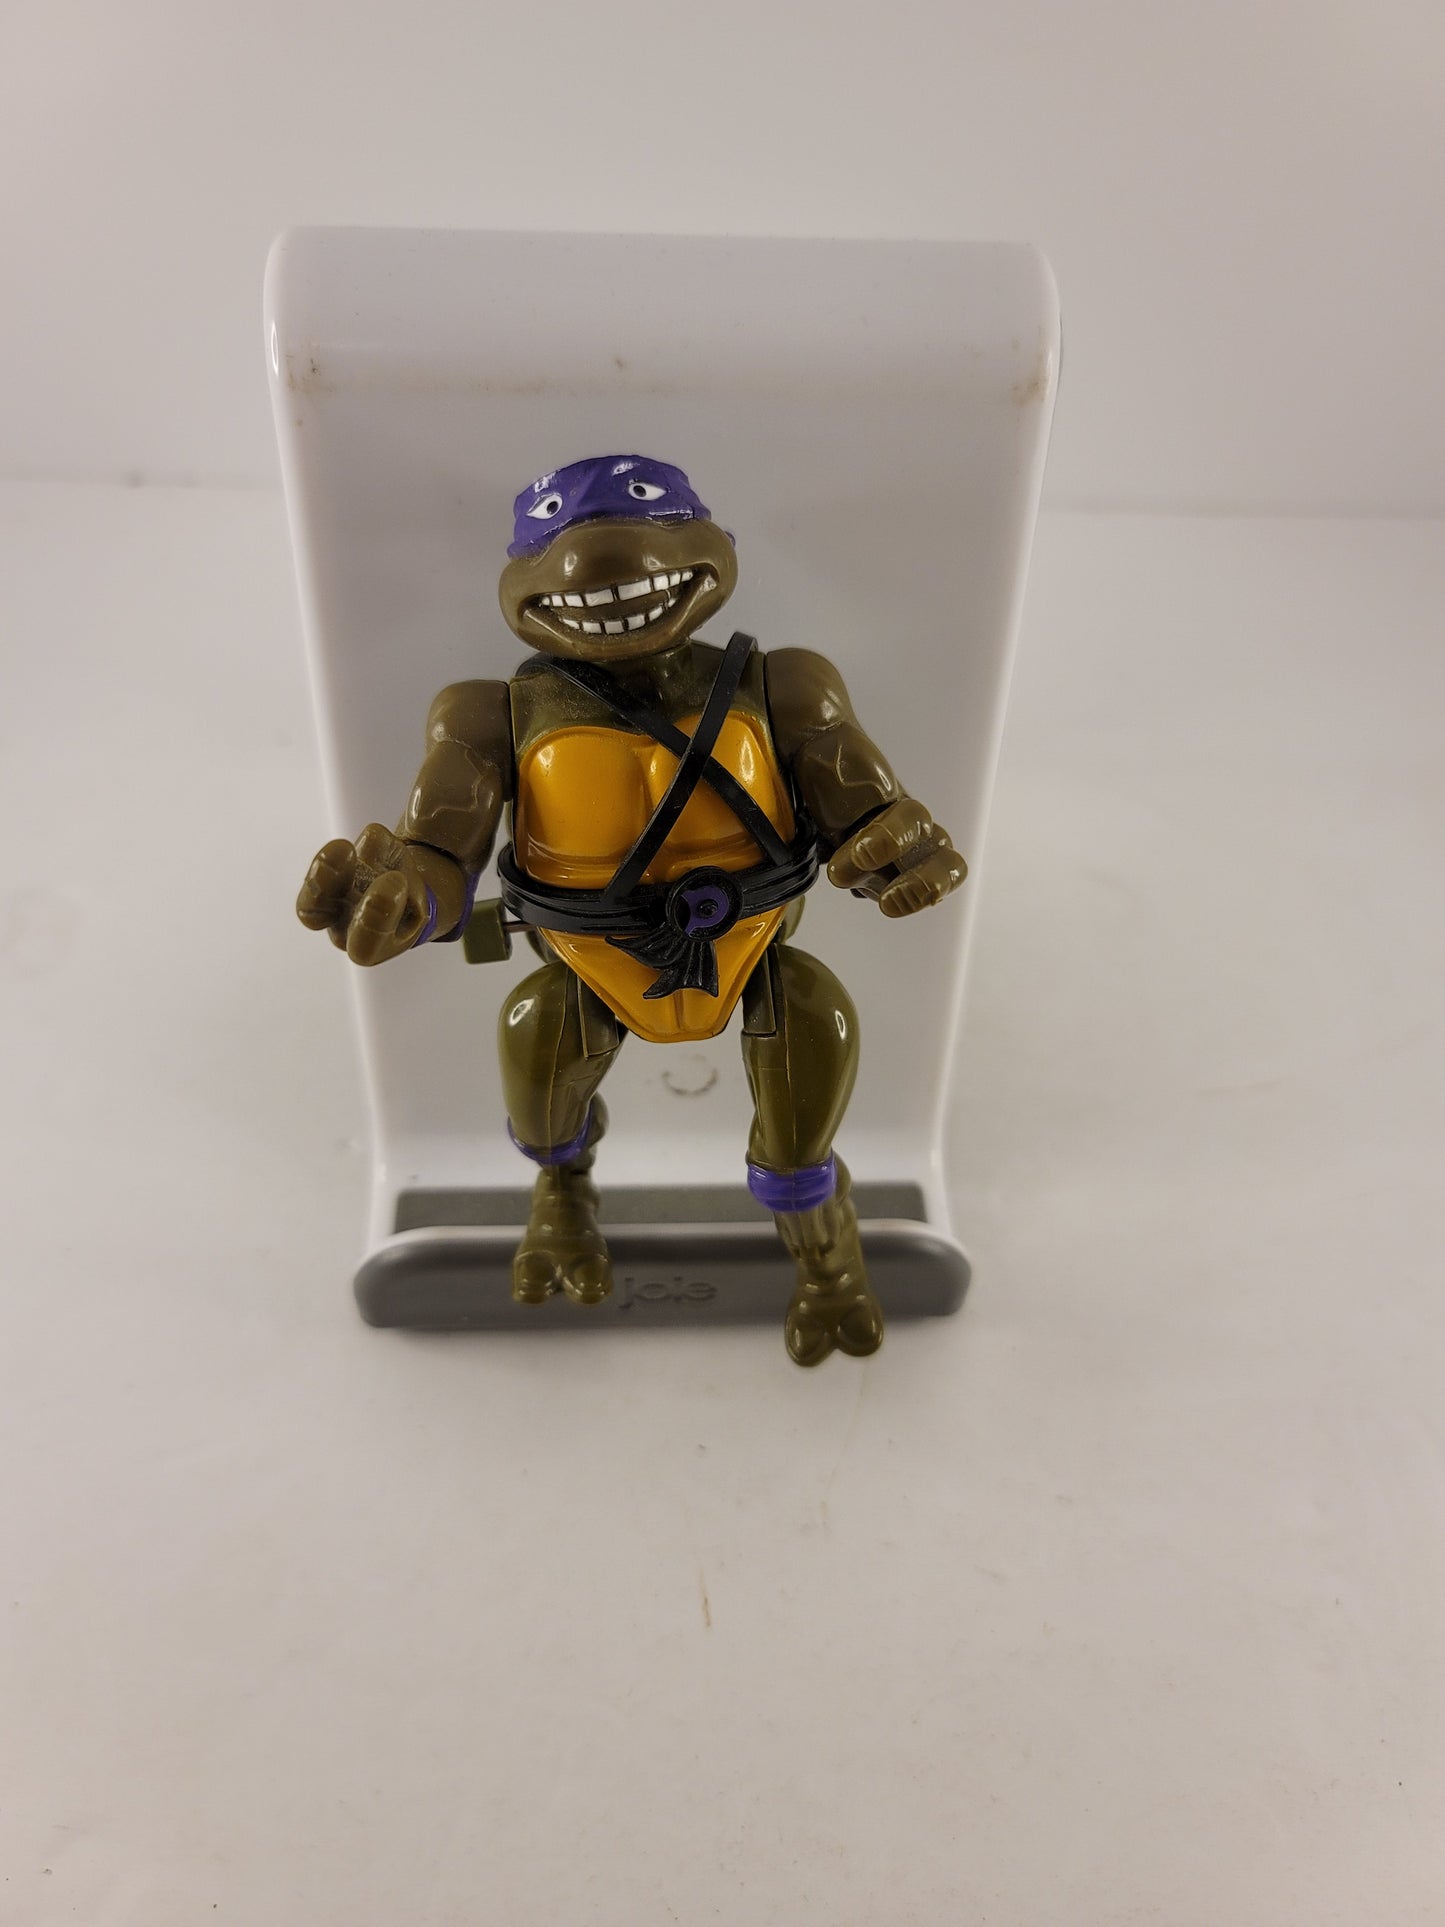 Sewer Swimming Donatello - 1989 Teenage Mutant Ninja Turtles